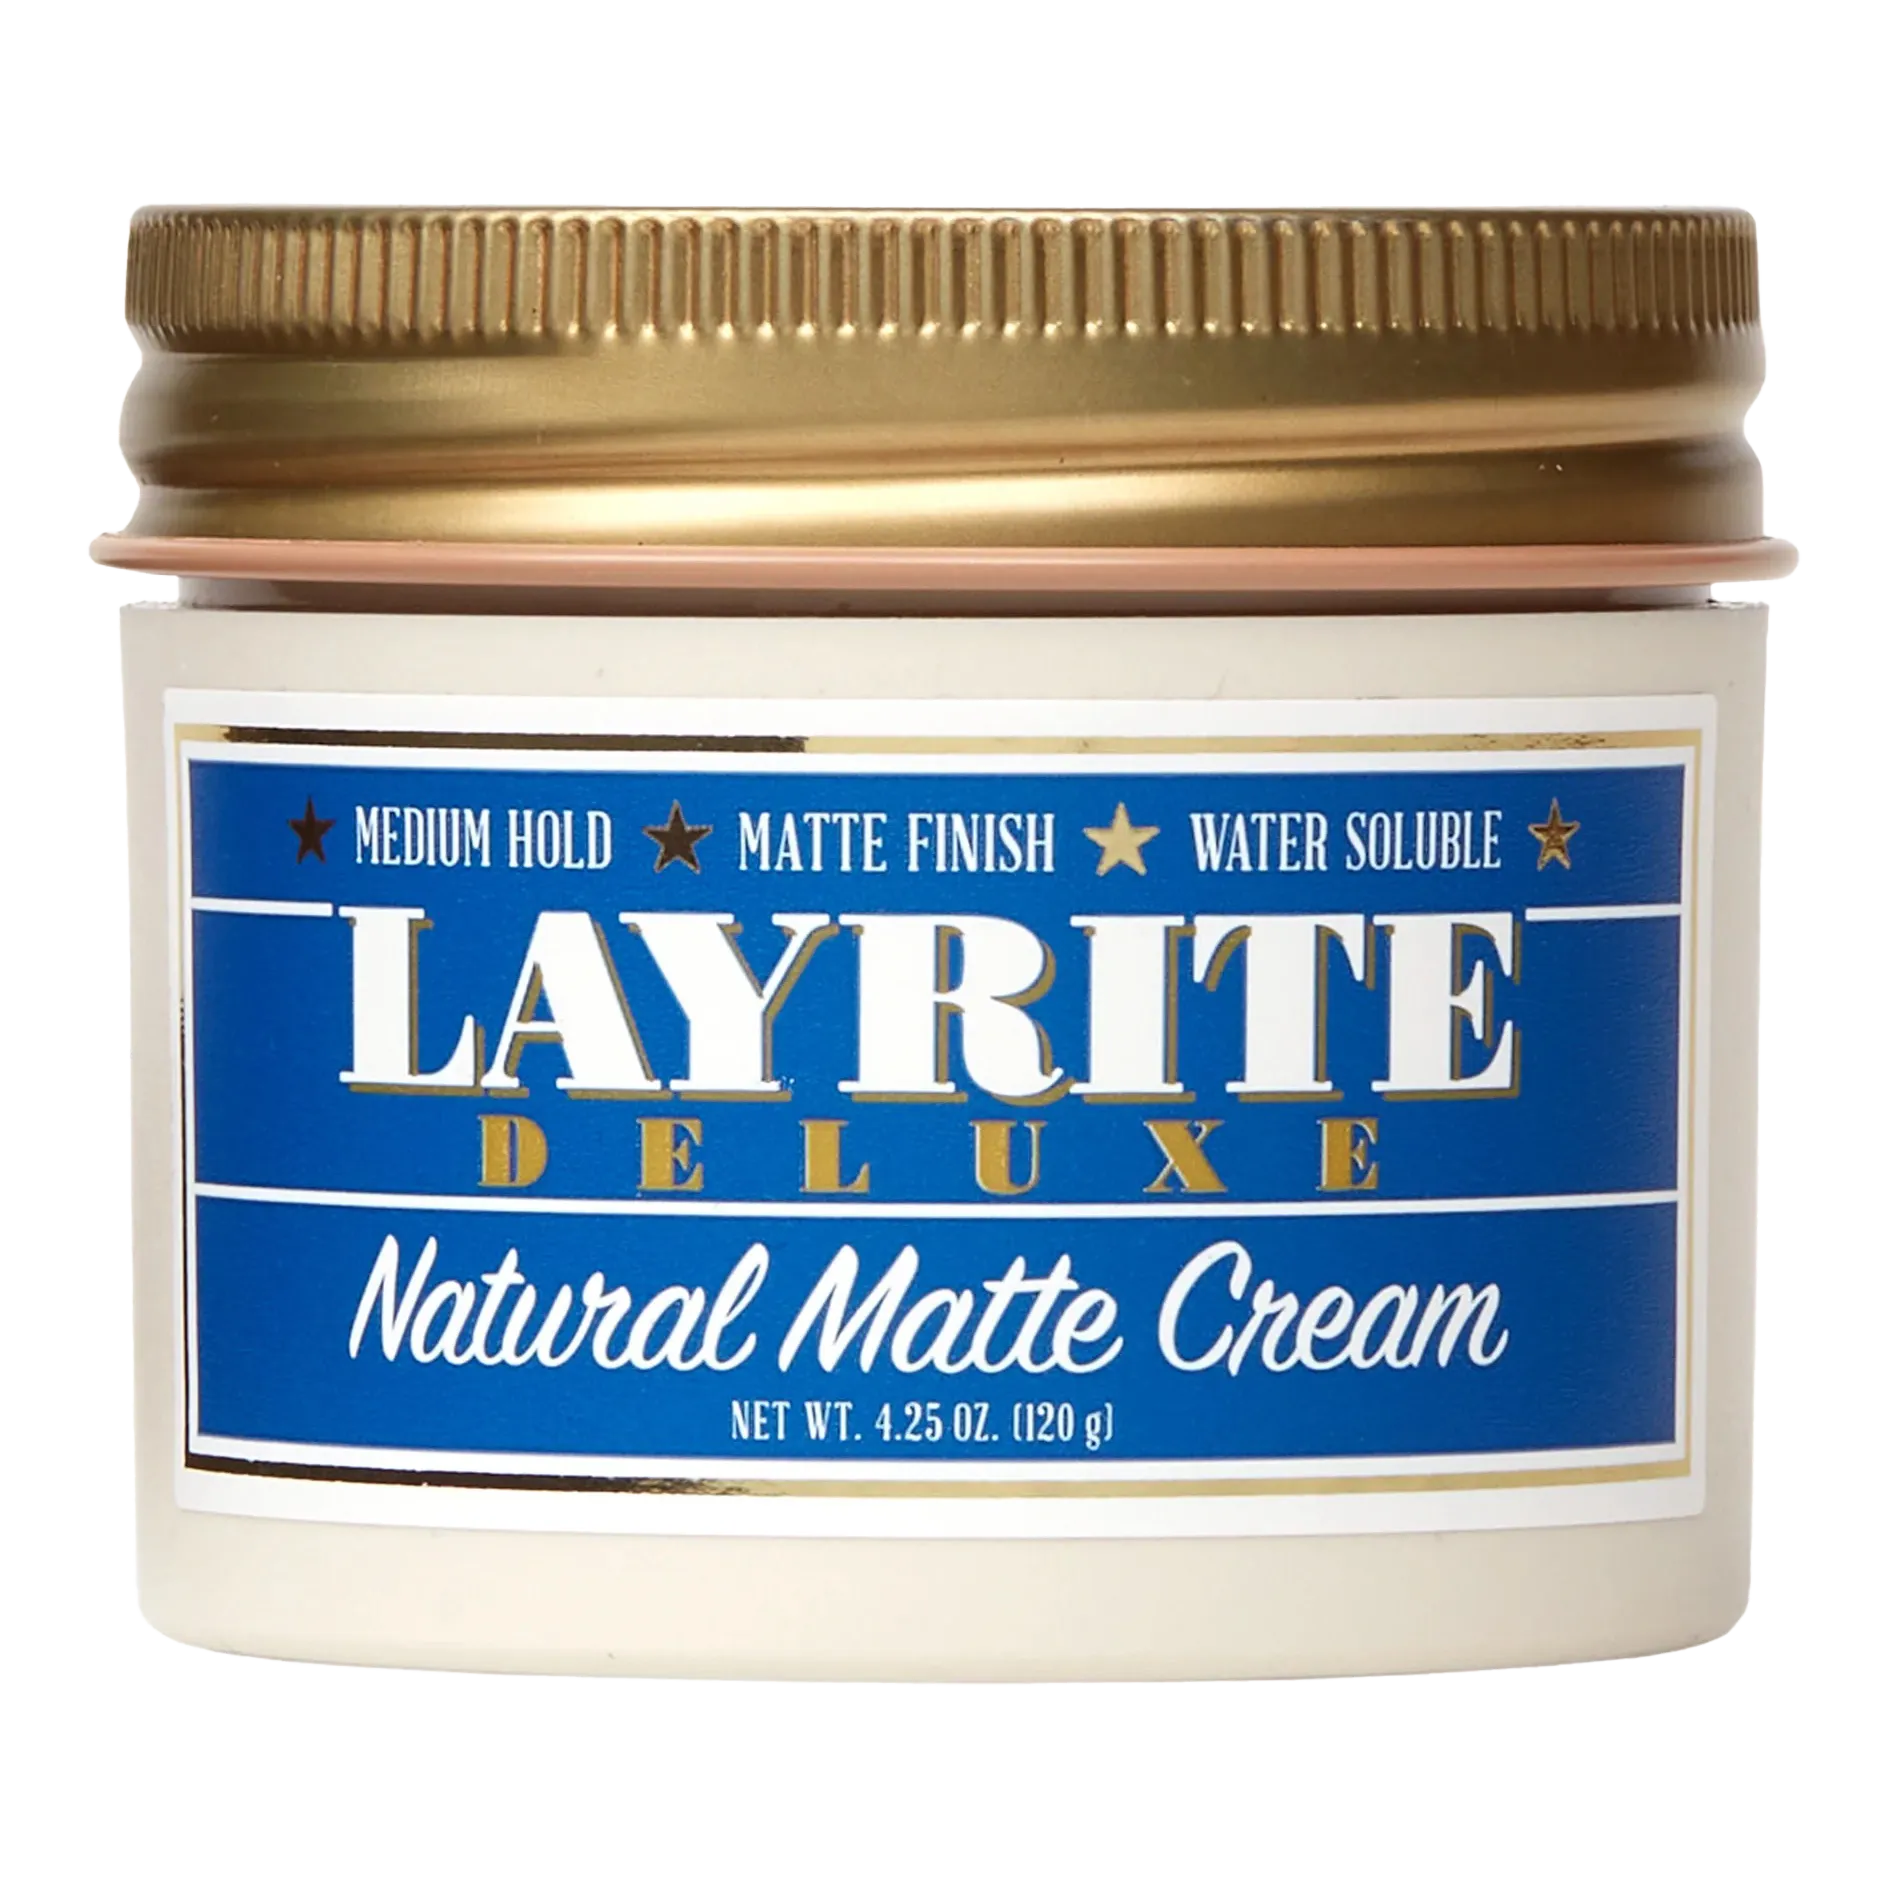 Layrite Natural Matte Cream 120 g 